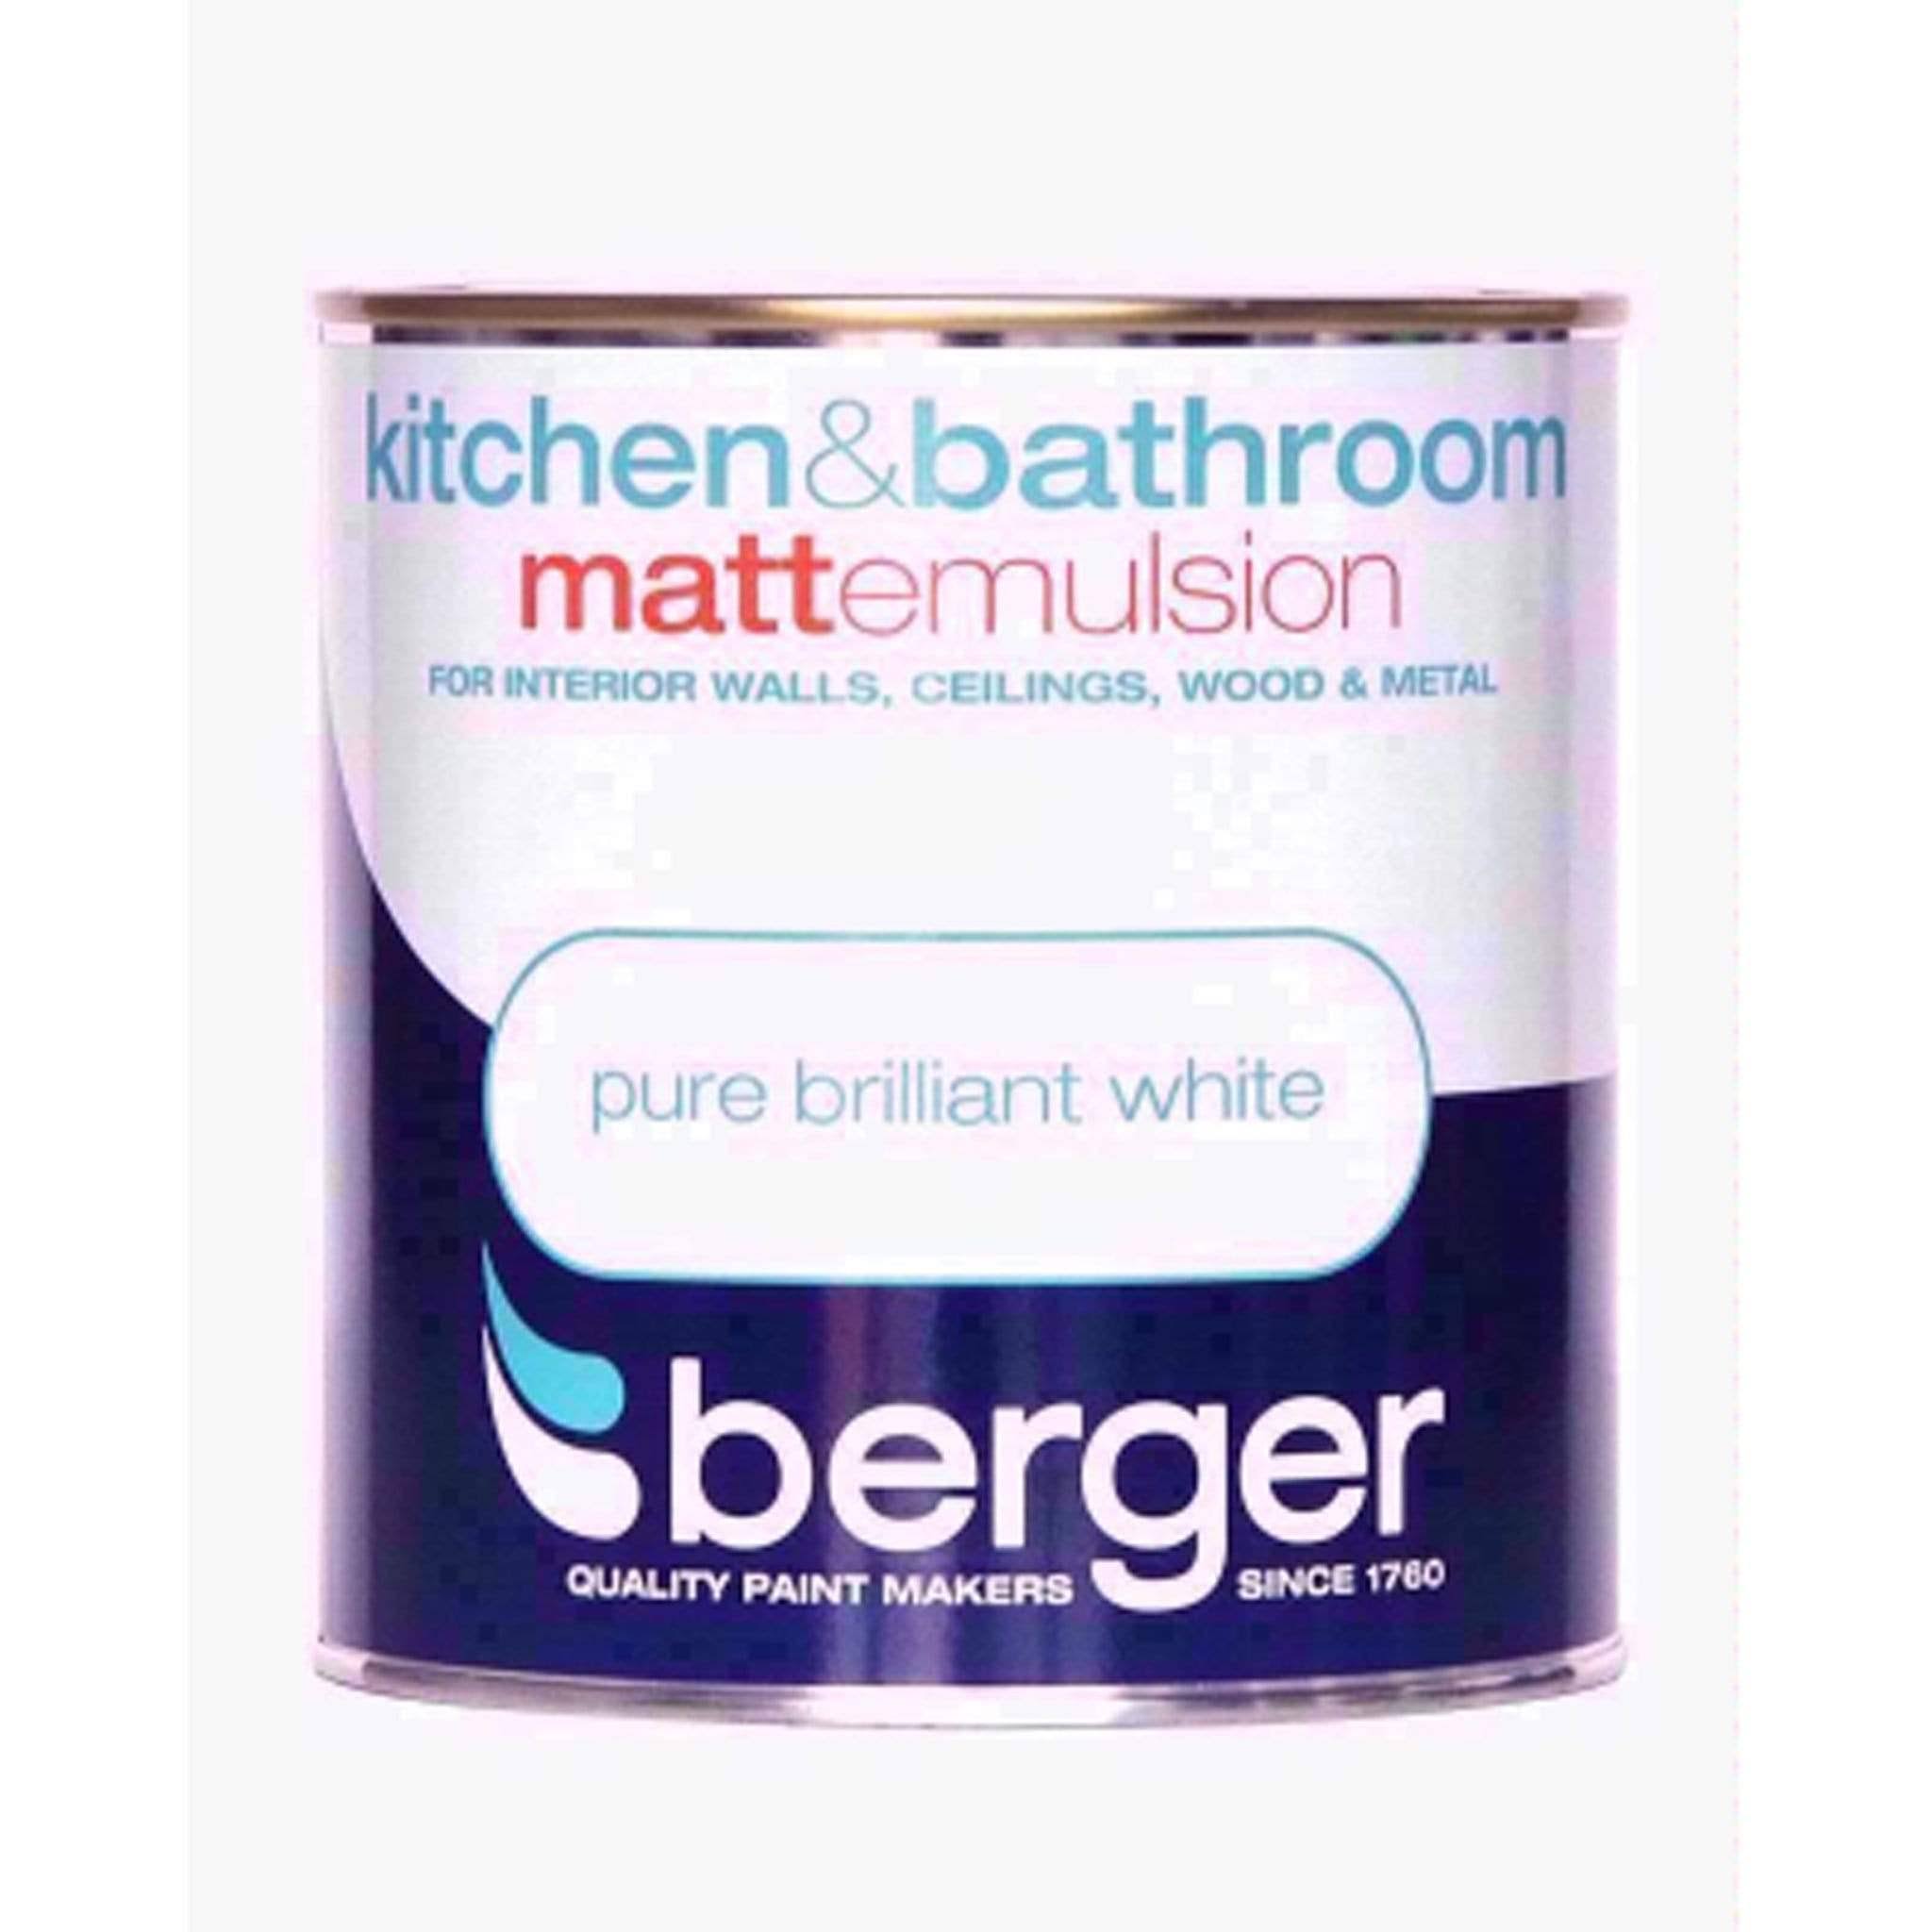 Berger Kitchen and Bathroom Matt Emulsion Paint - 1L, Pure Brilliant White